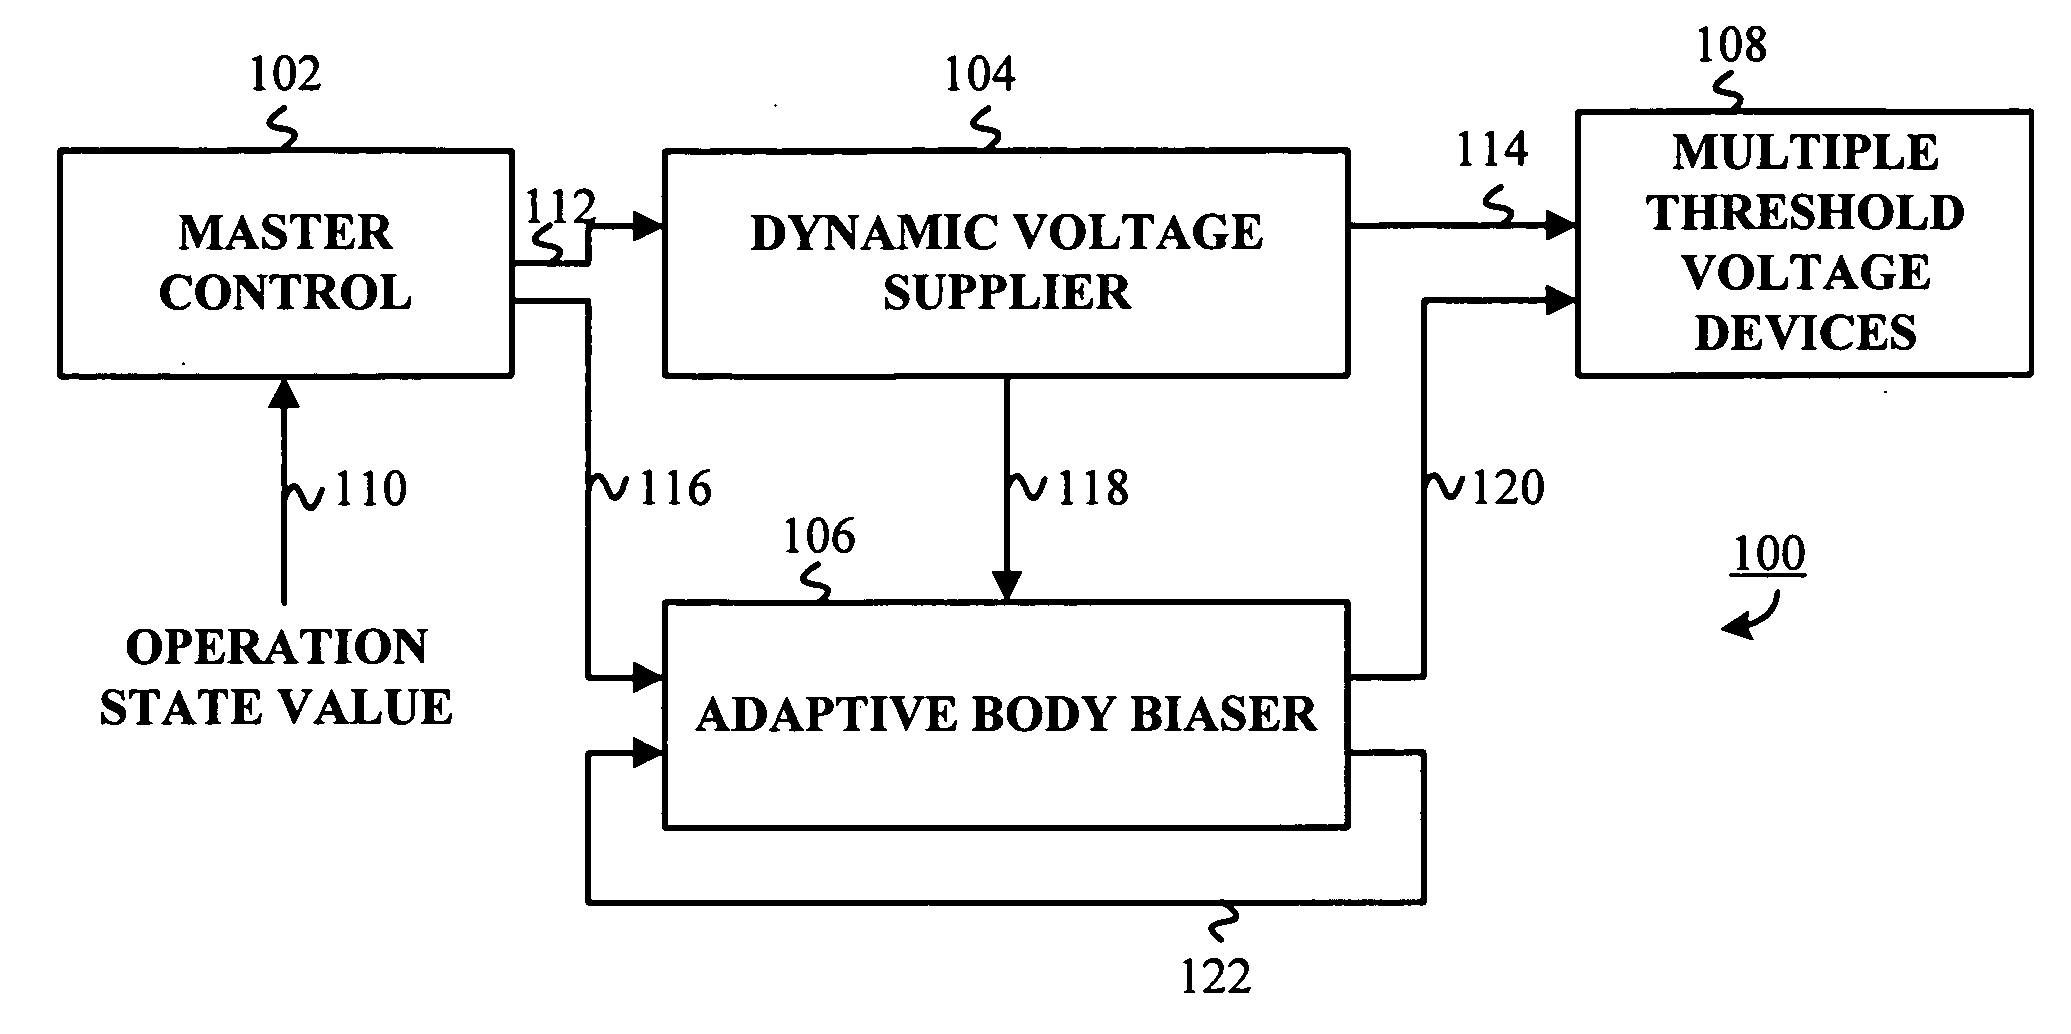 Adaptive supply voltage body bias apparatus and method thereof